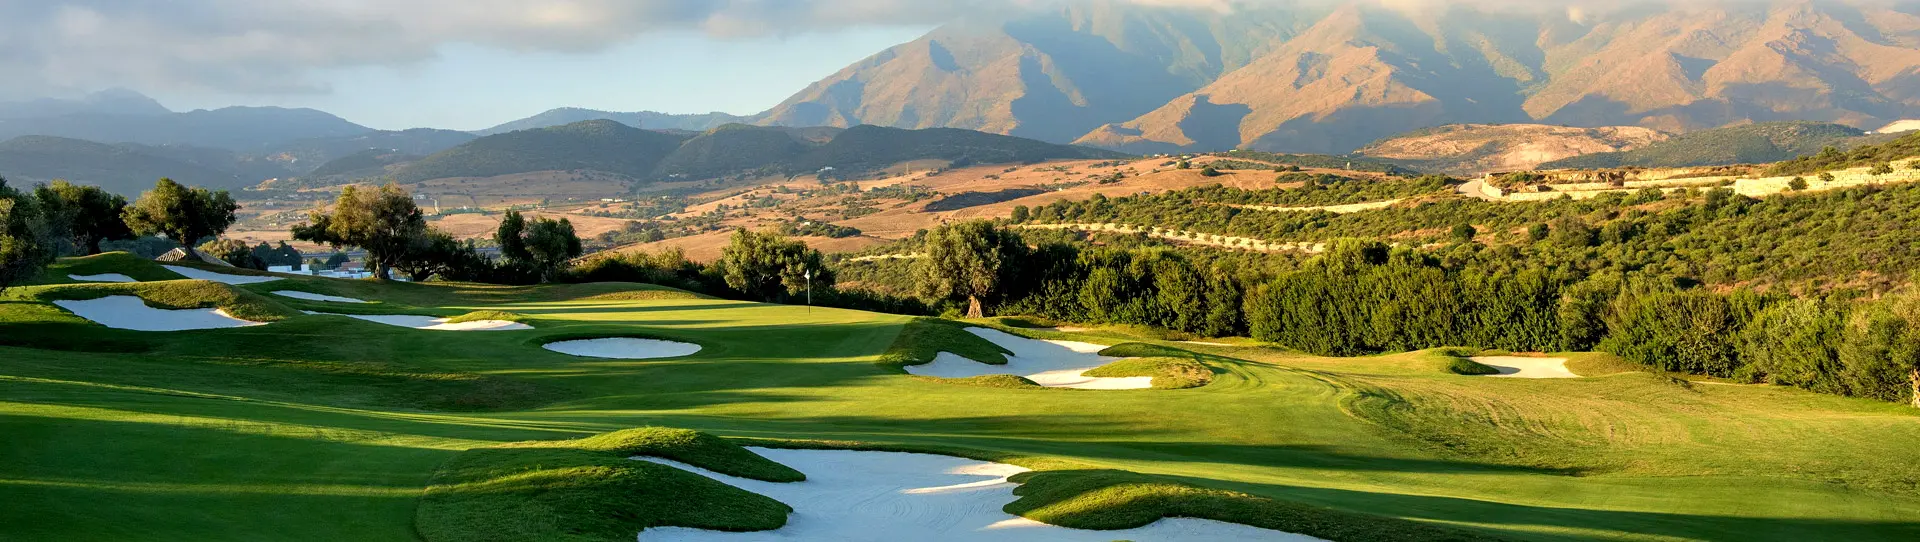 Spain golf holidays - Finca Cortesin Twix Experience - Photo 1